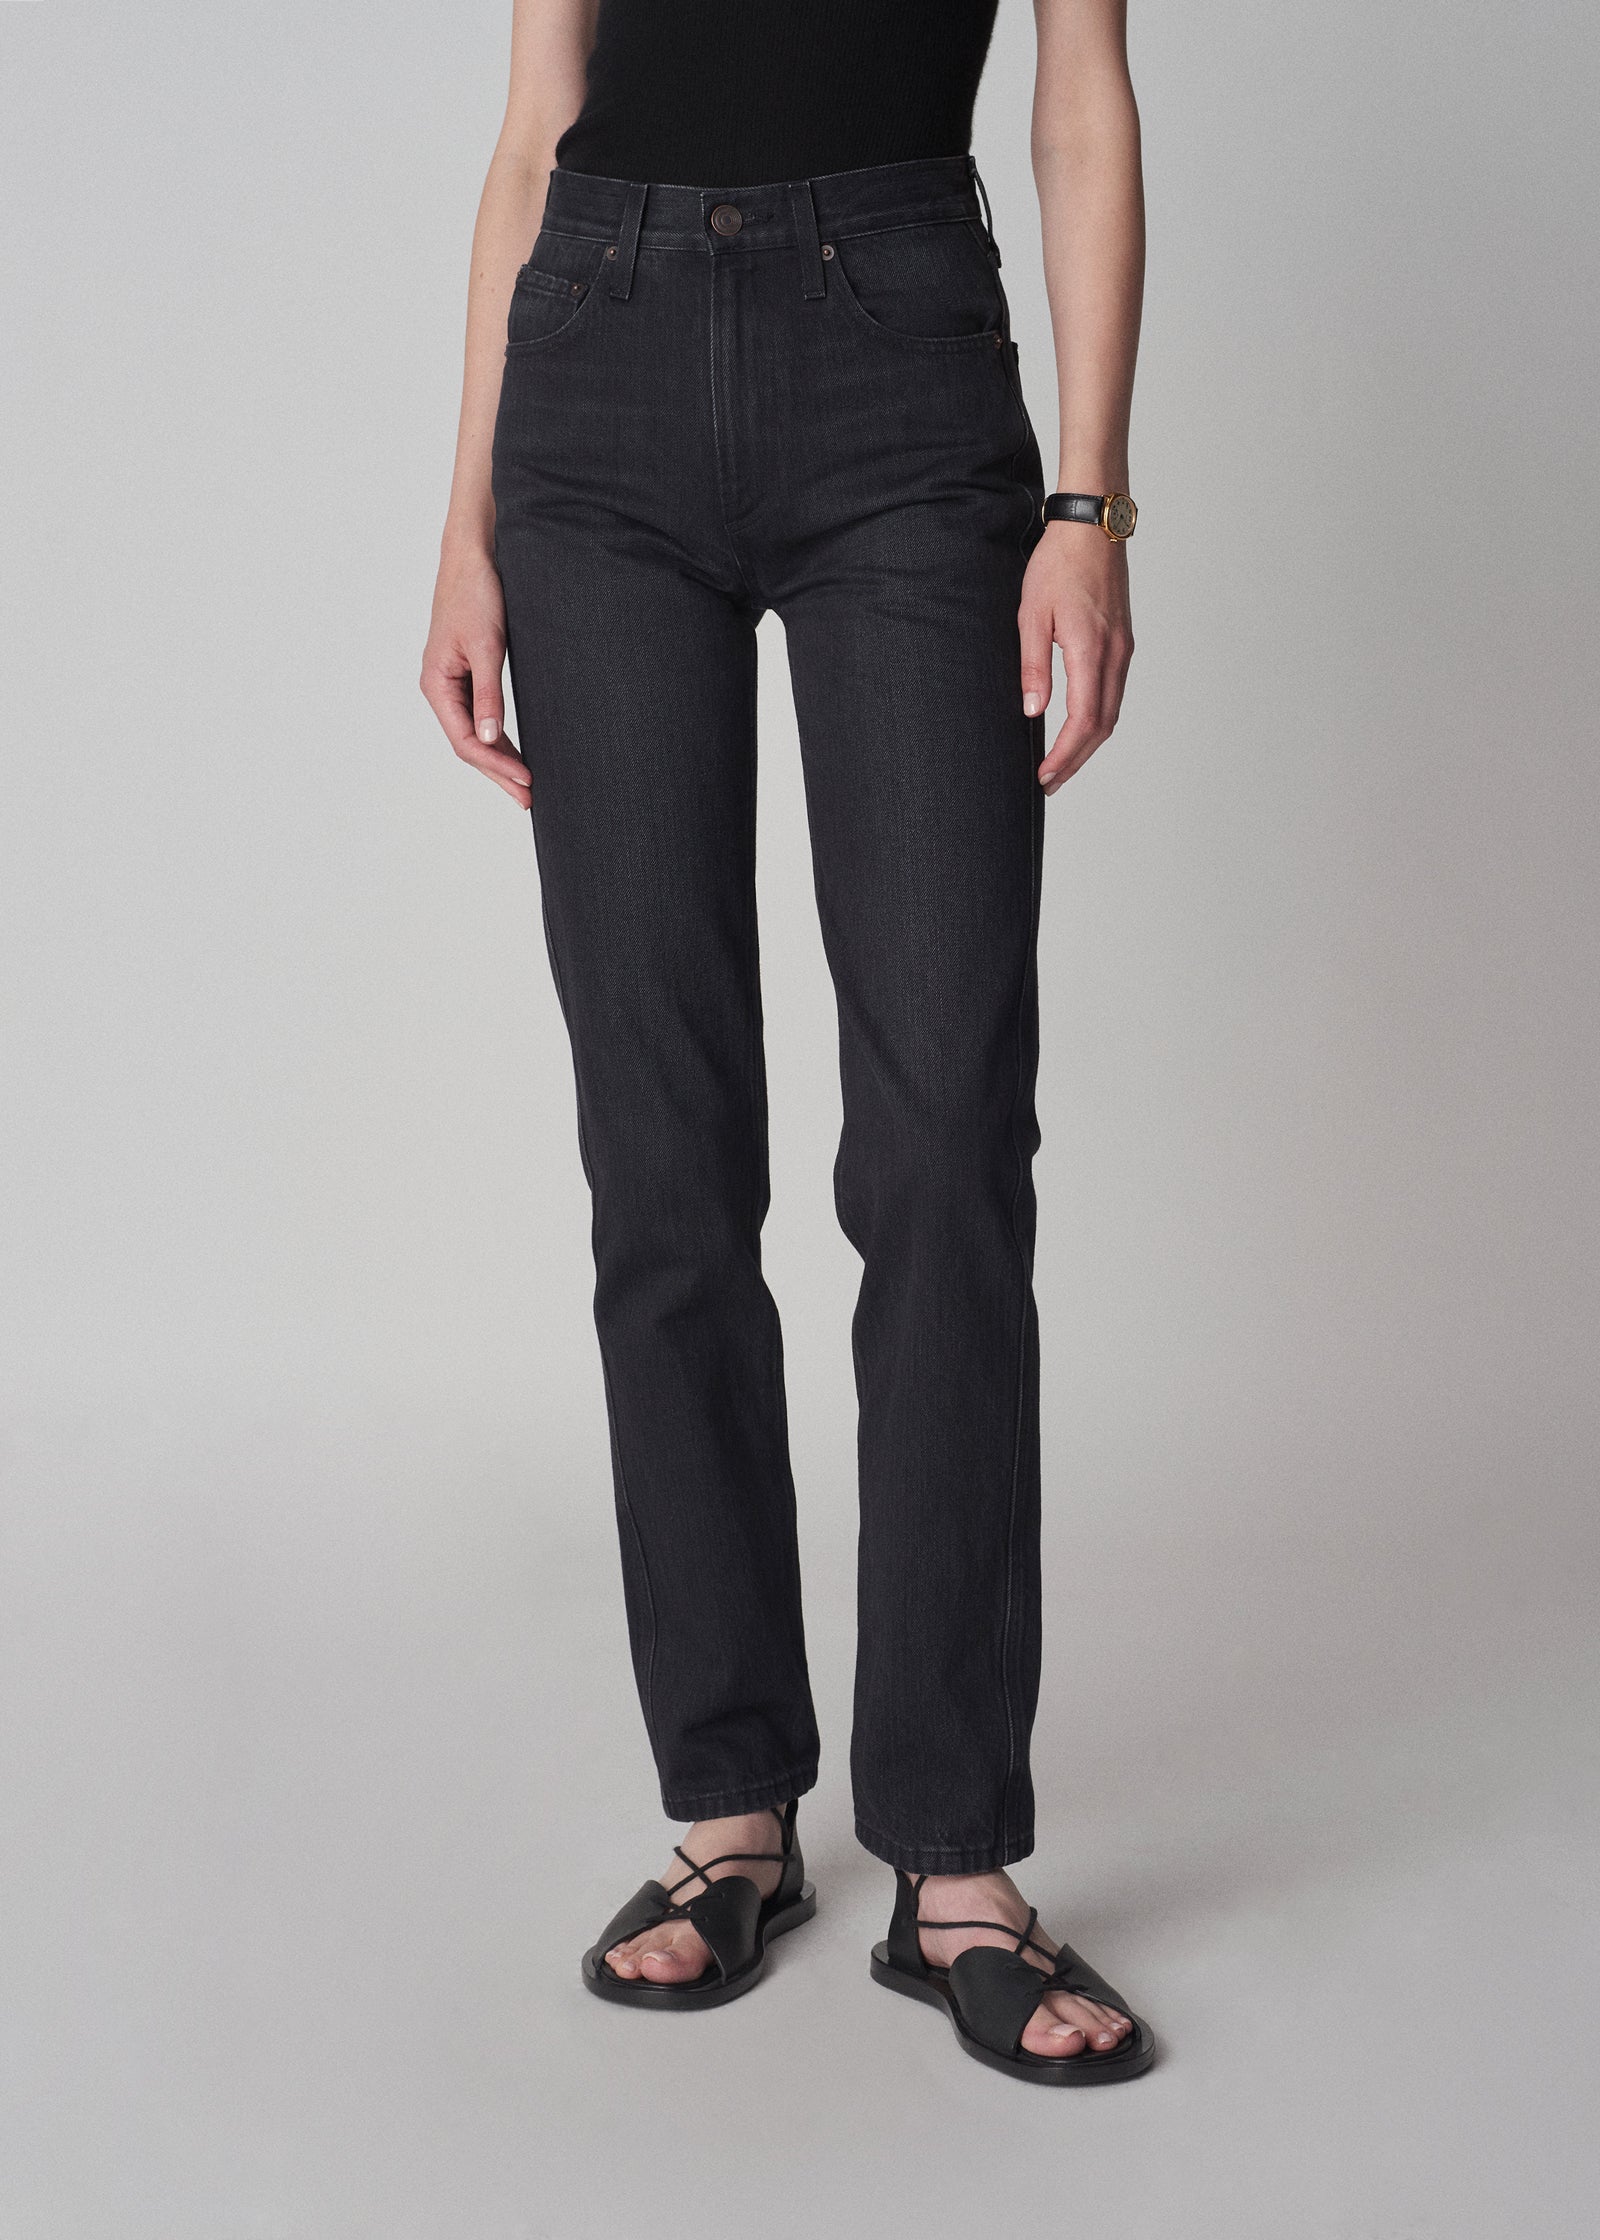 Denim Co Womens Blue Denim Jeans size 16 - beyond exchange